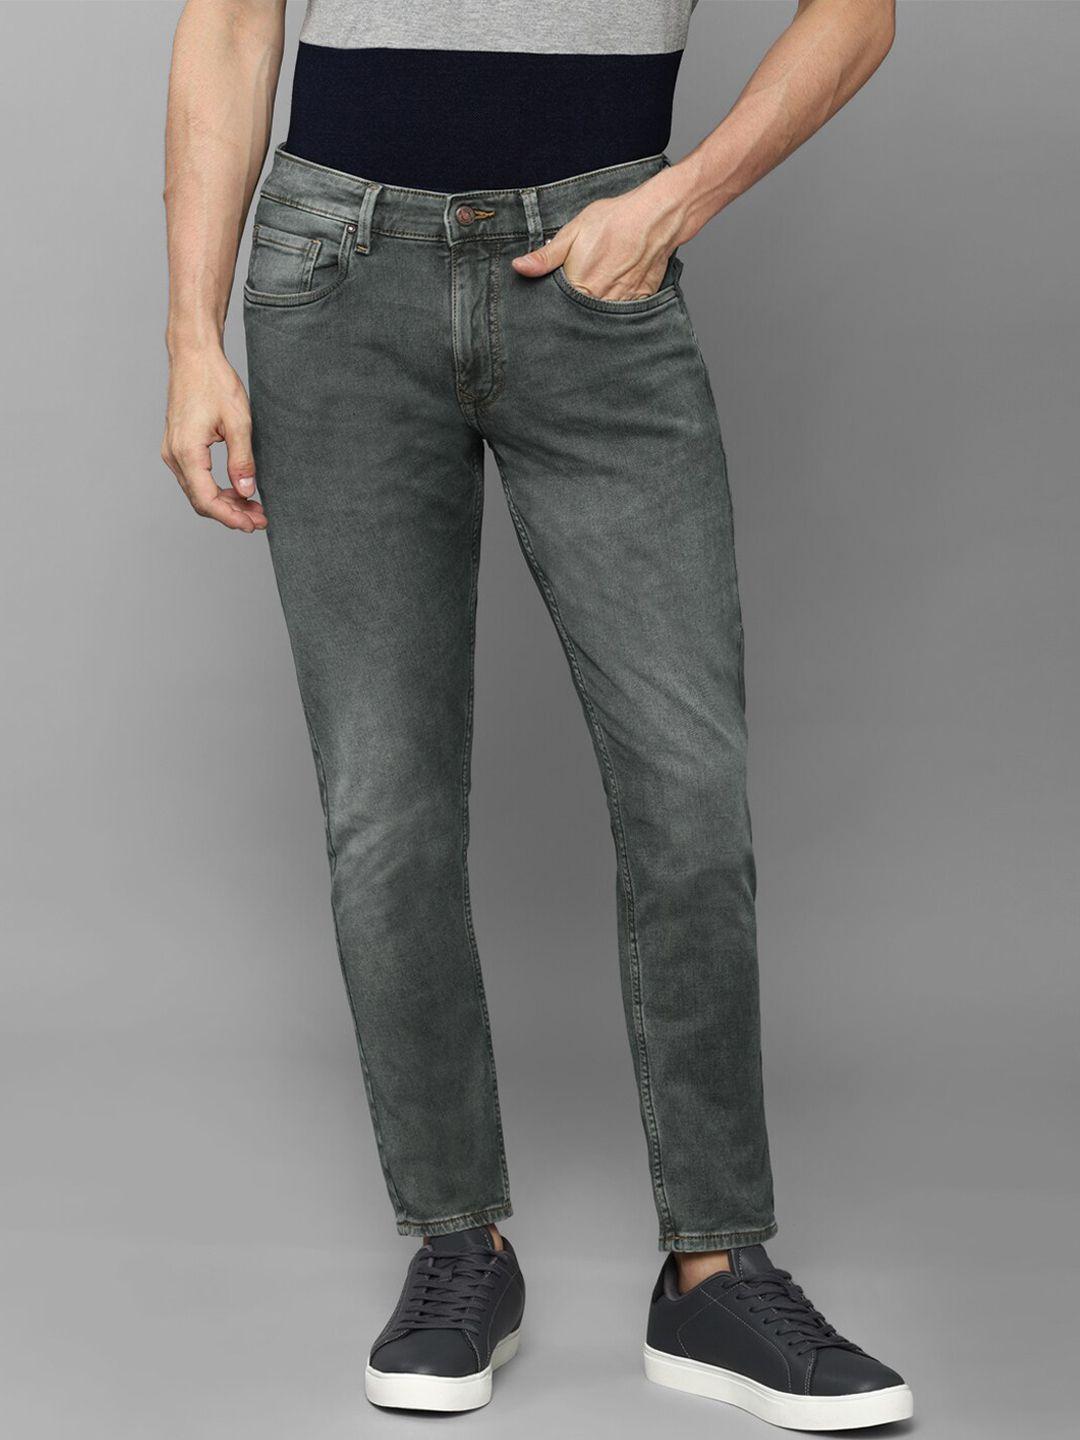 Louis Philippe Jeans Men Grey Slim Fit Light Fade Jeans